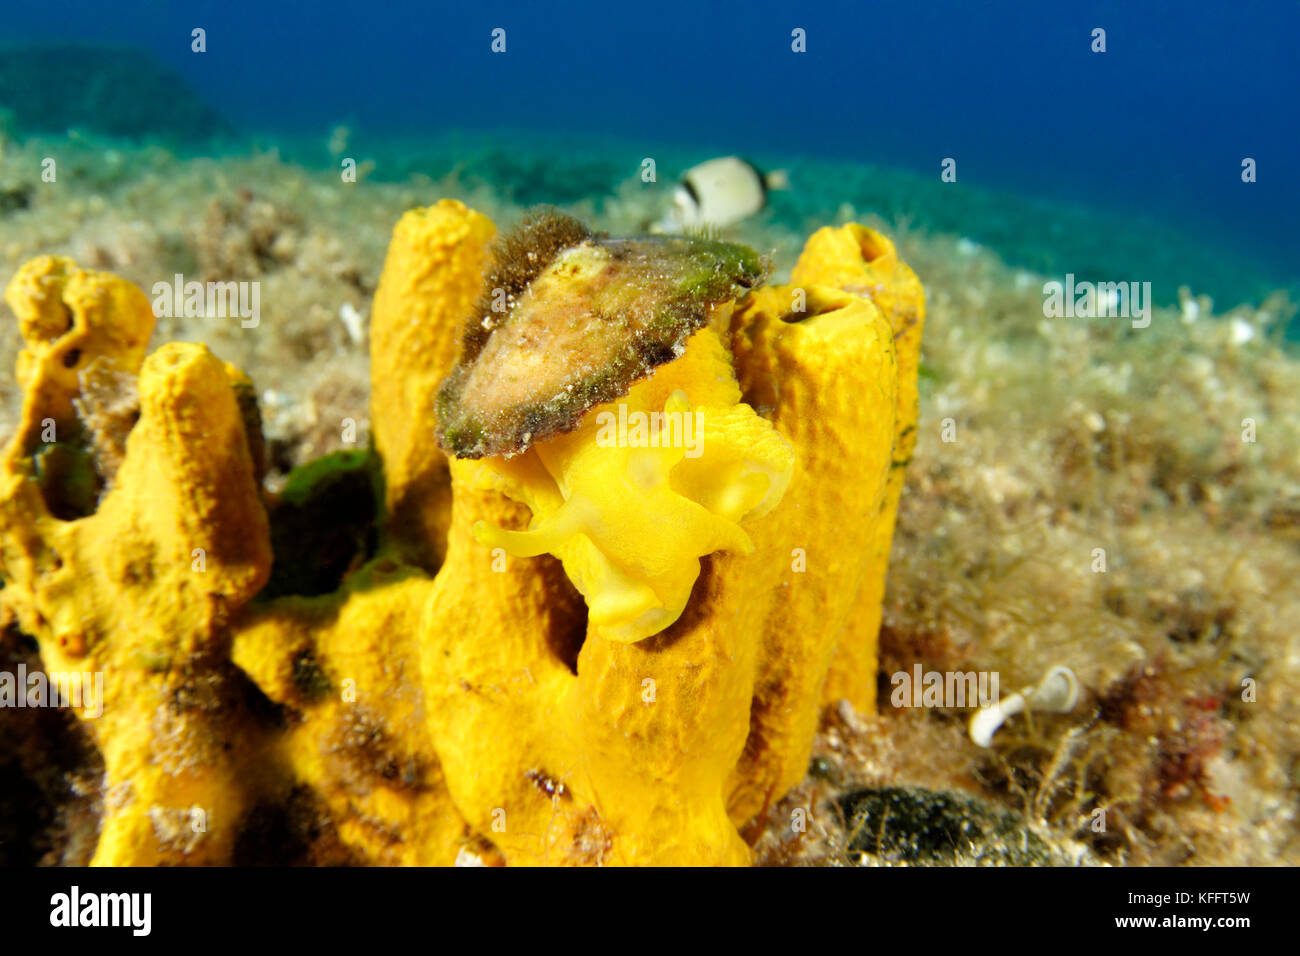 Yellow umbrella slug, Tylodina perversa on Yellow tube sponge, Adriatic Sea, Mediterranean Sea, Kornati Islands, Dalmatia, Croatia Stock Photo